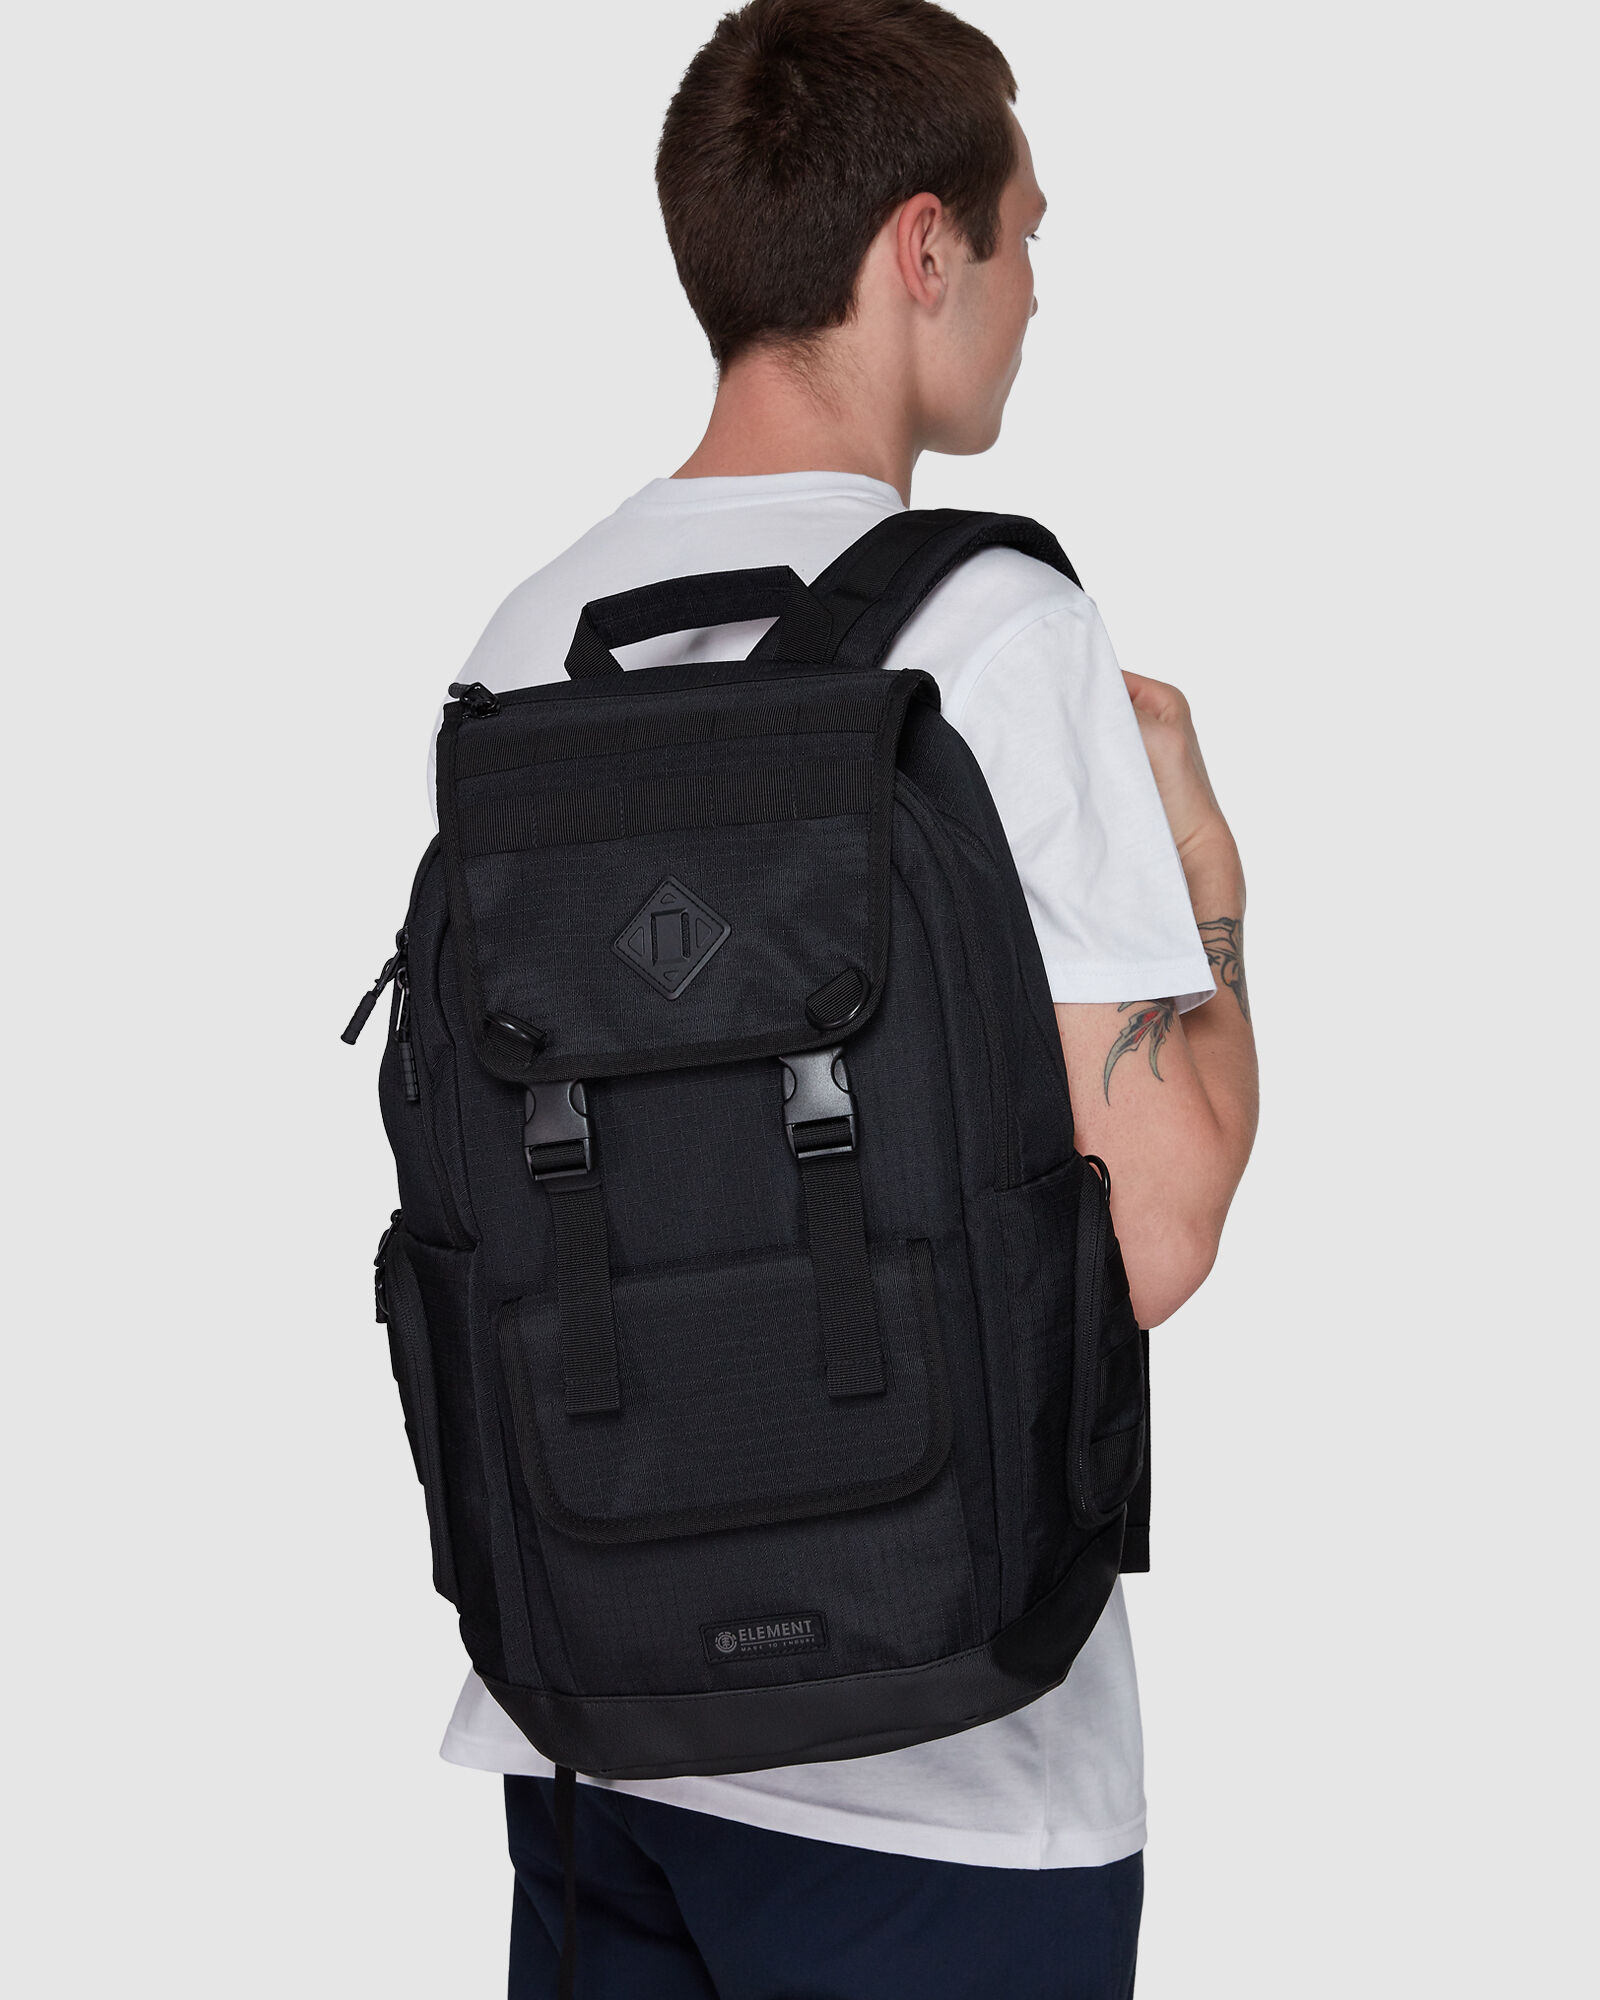 recruit backpack